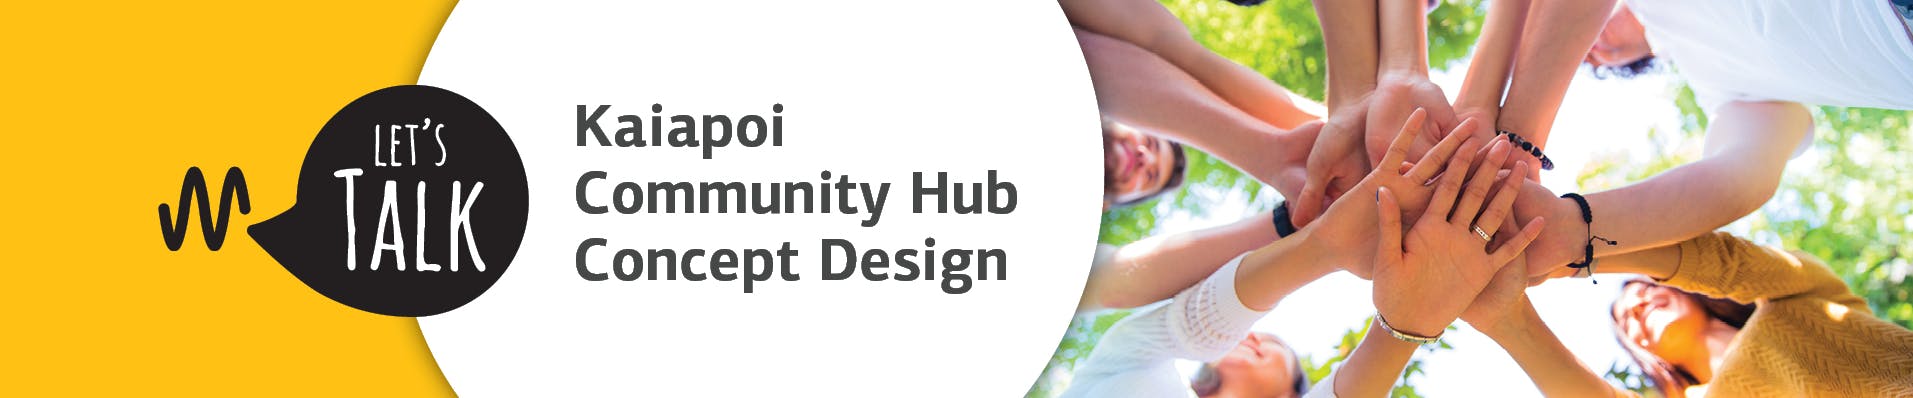 Let's Talk About Kaiapoi Community Hub